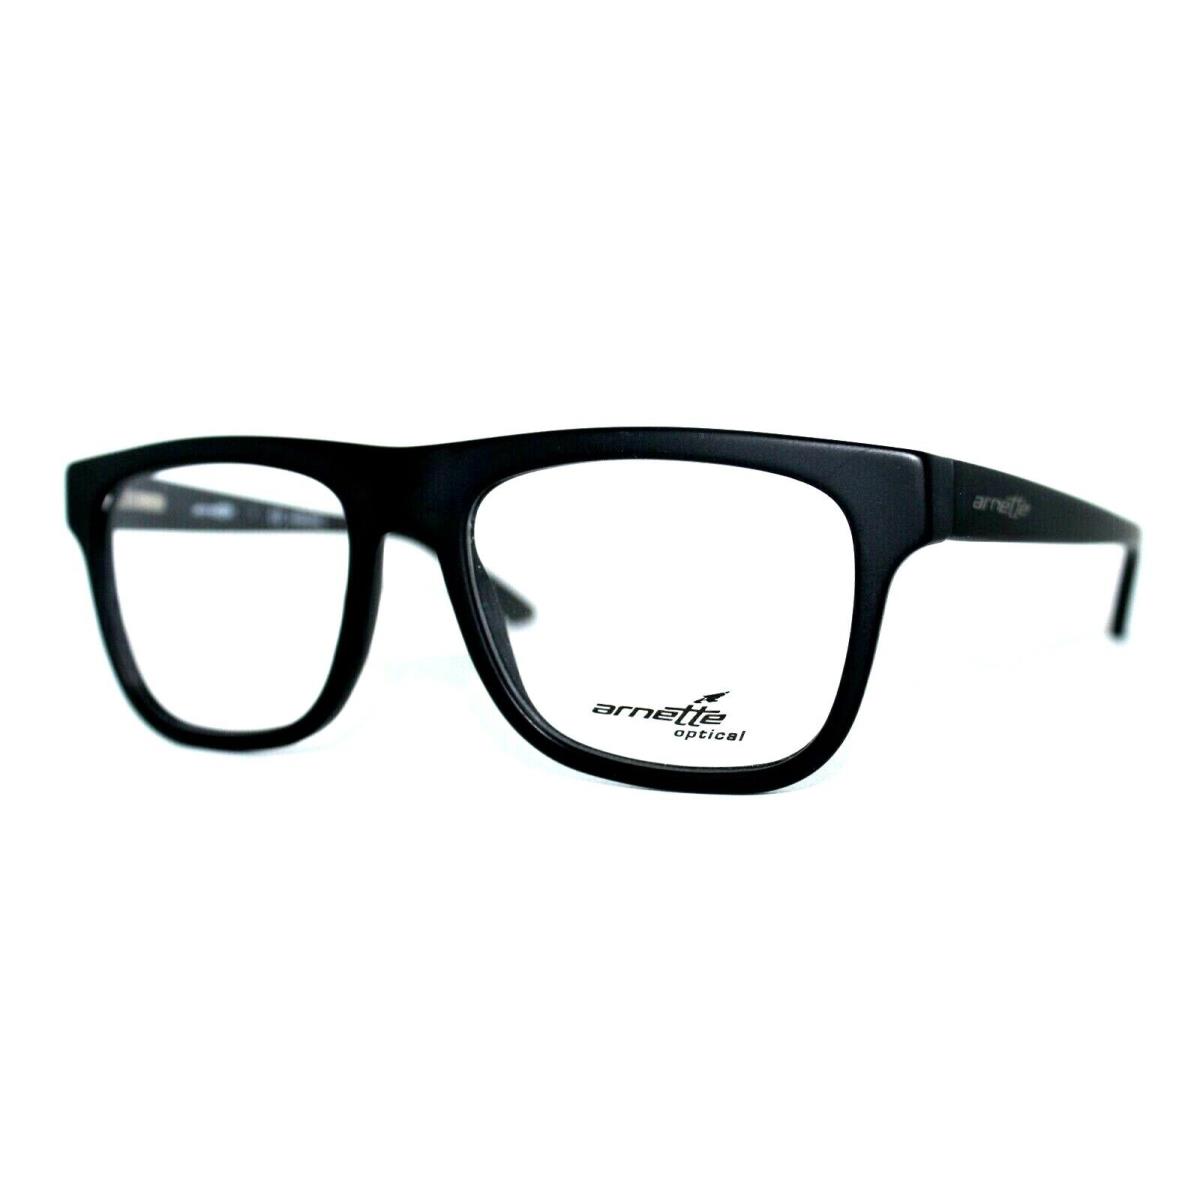 Arnette Outsmart 7111 1108 Black Eyeglasses Frames 52MM W/case